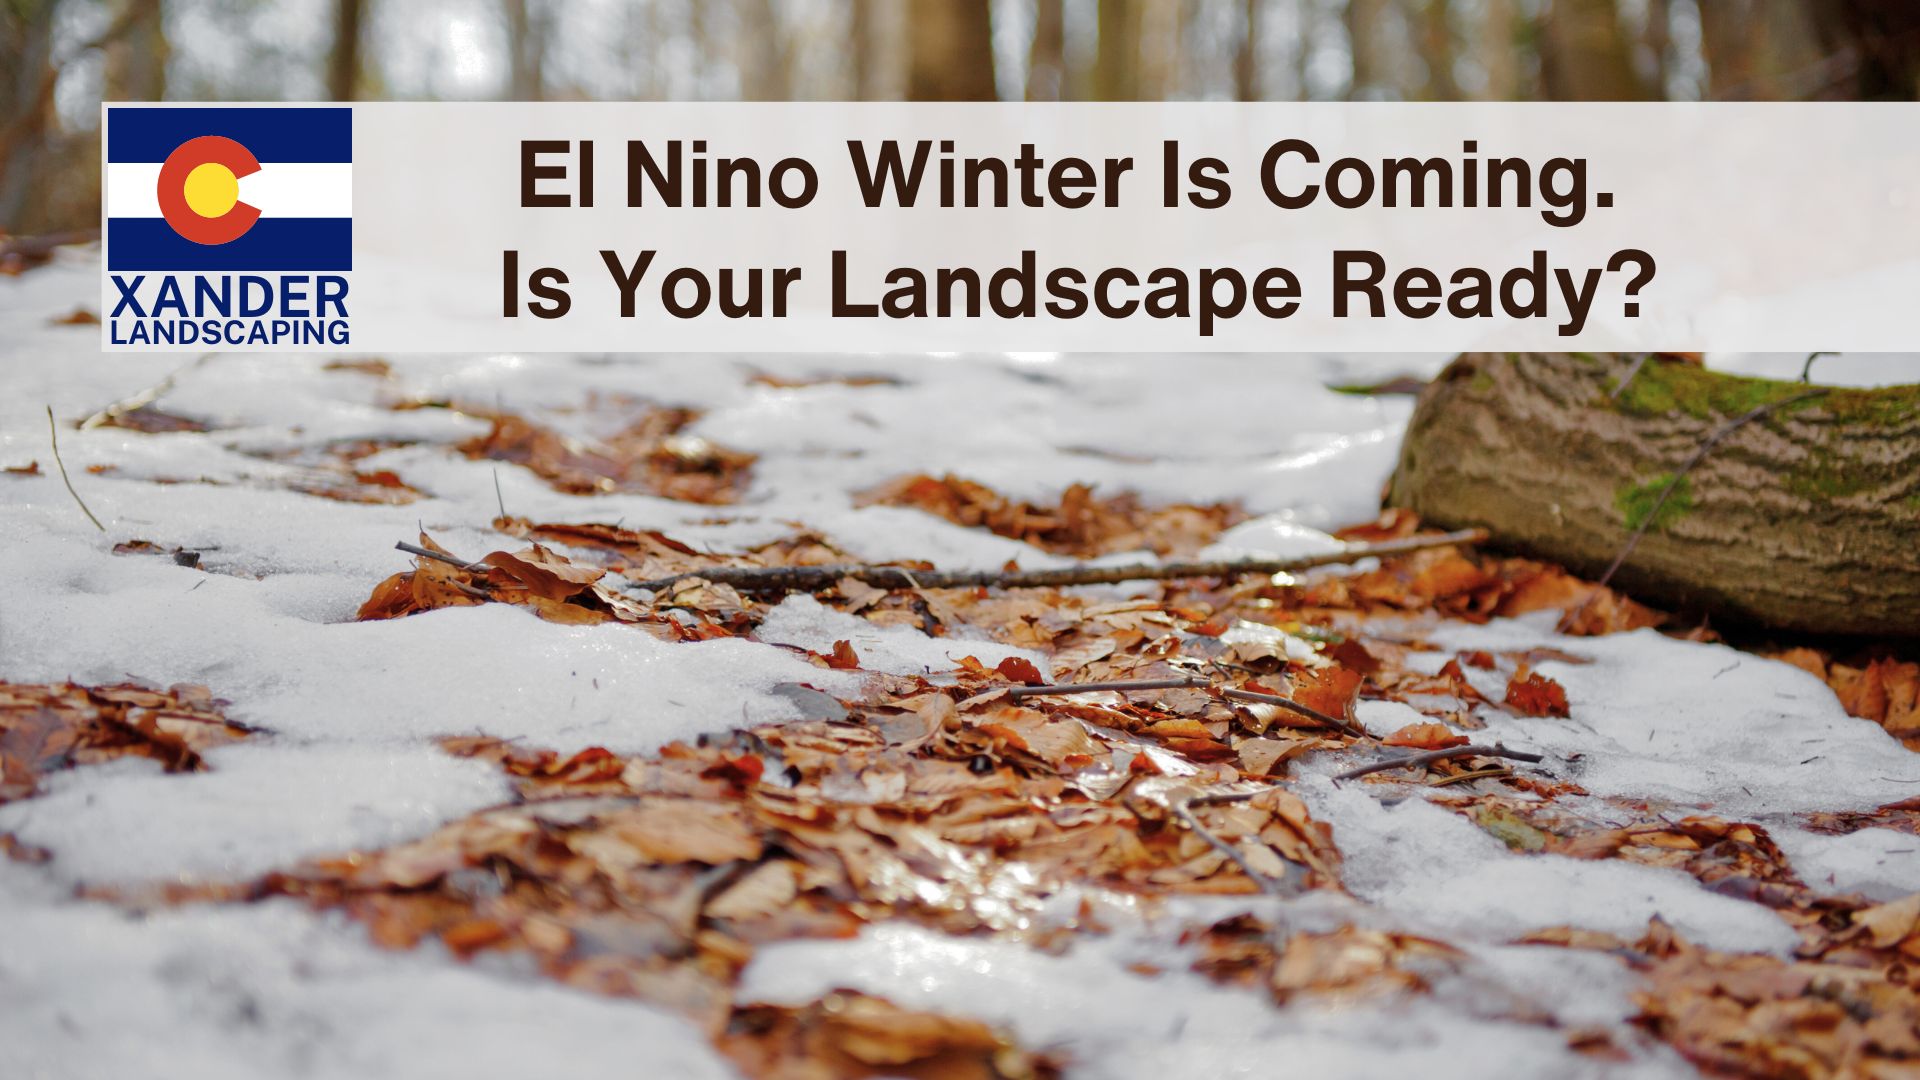 El Nino Winter Is Coming. Is Your Landscape Ready? - Xander Landscaping - Denver Colorado winter landscape services